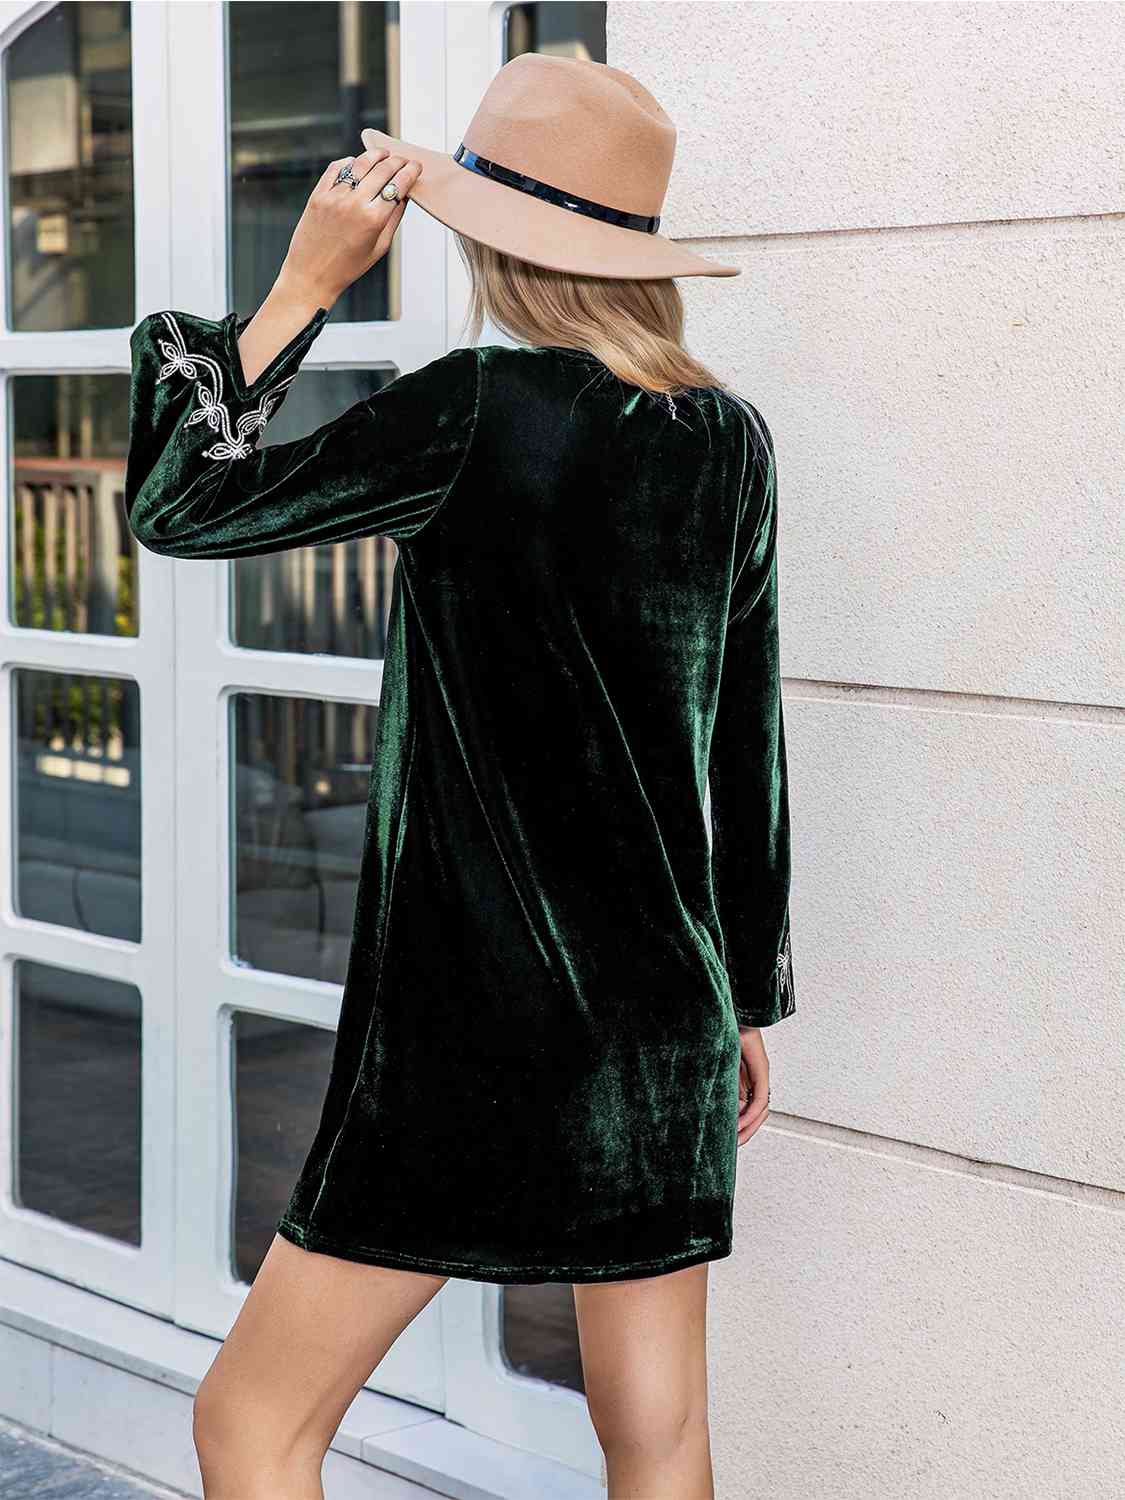 Light Gray V-Neck Slit Sleeve Mini Dress Sentient Beauty Fashions Apparel & Accessories